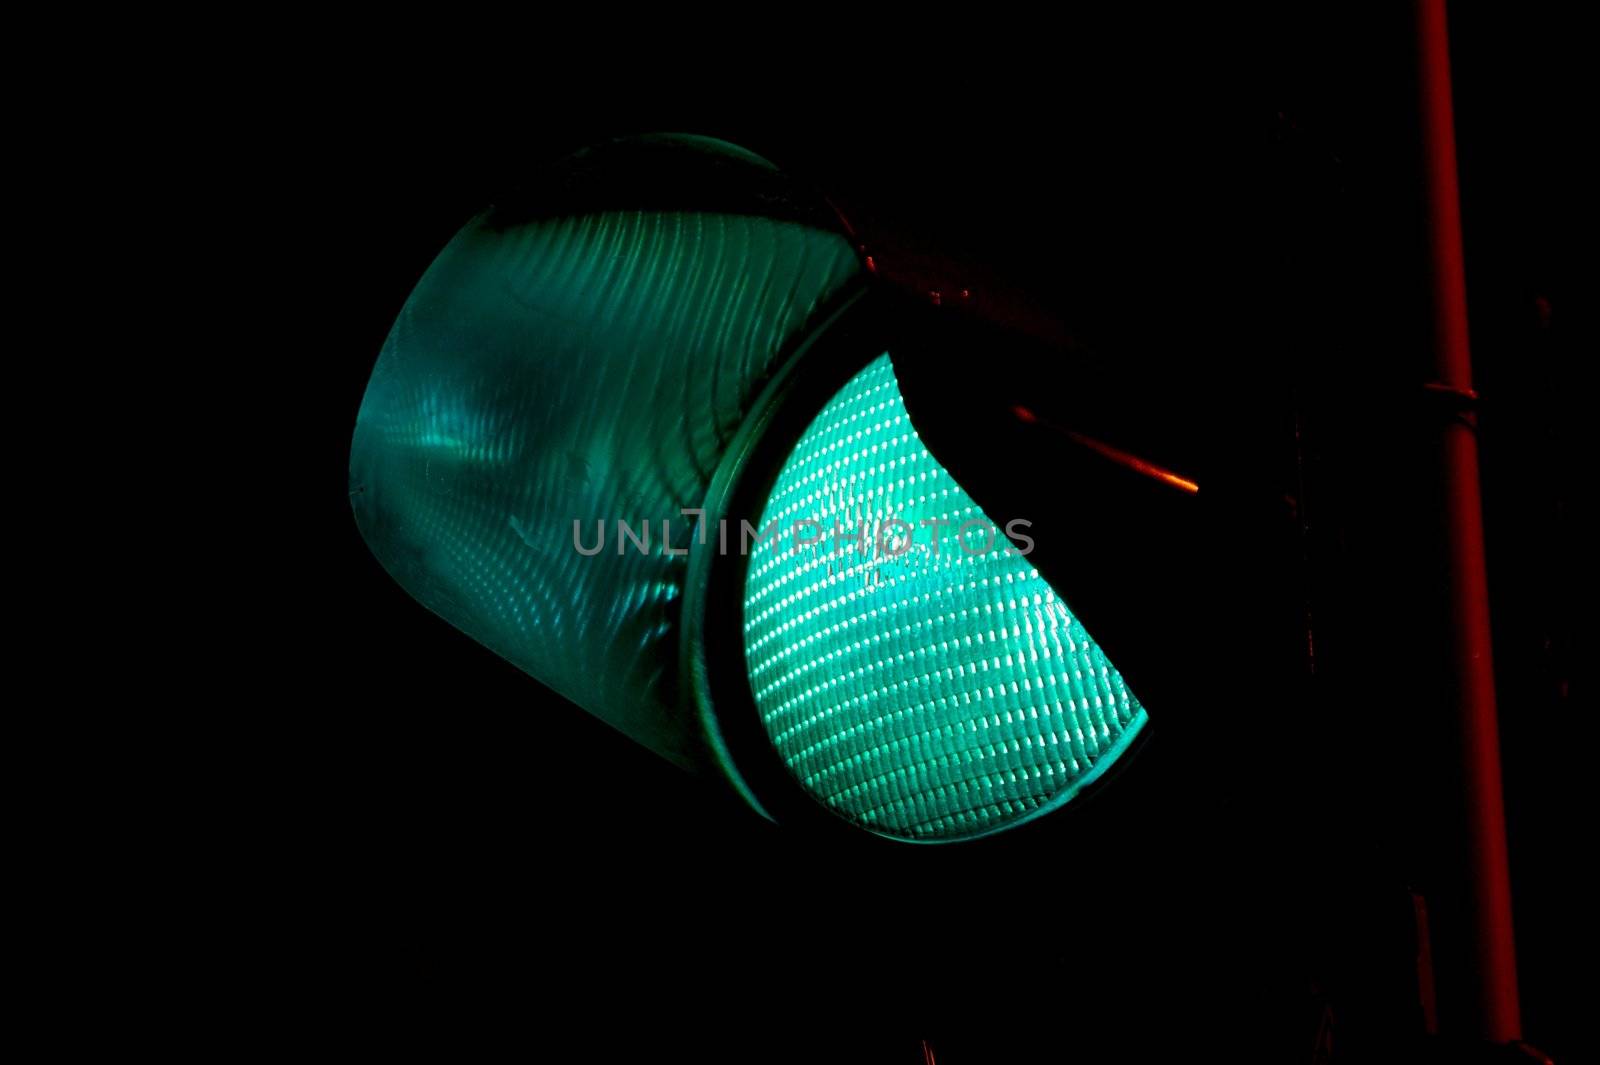 closeup of the green light on a traffic light